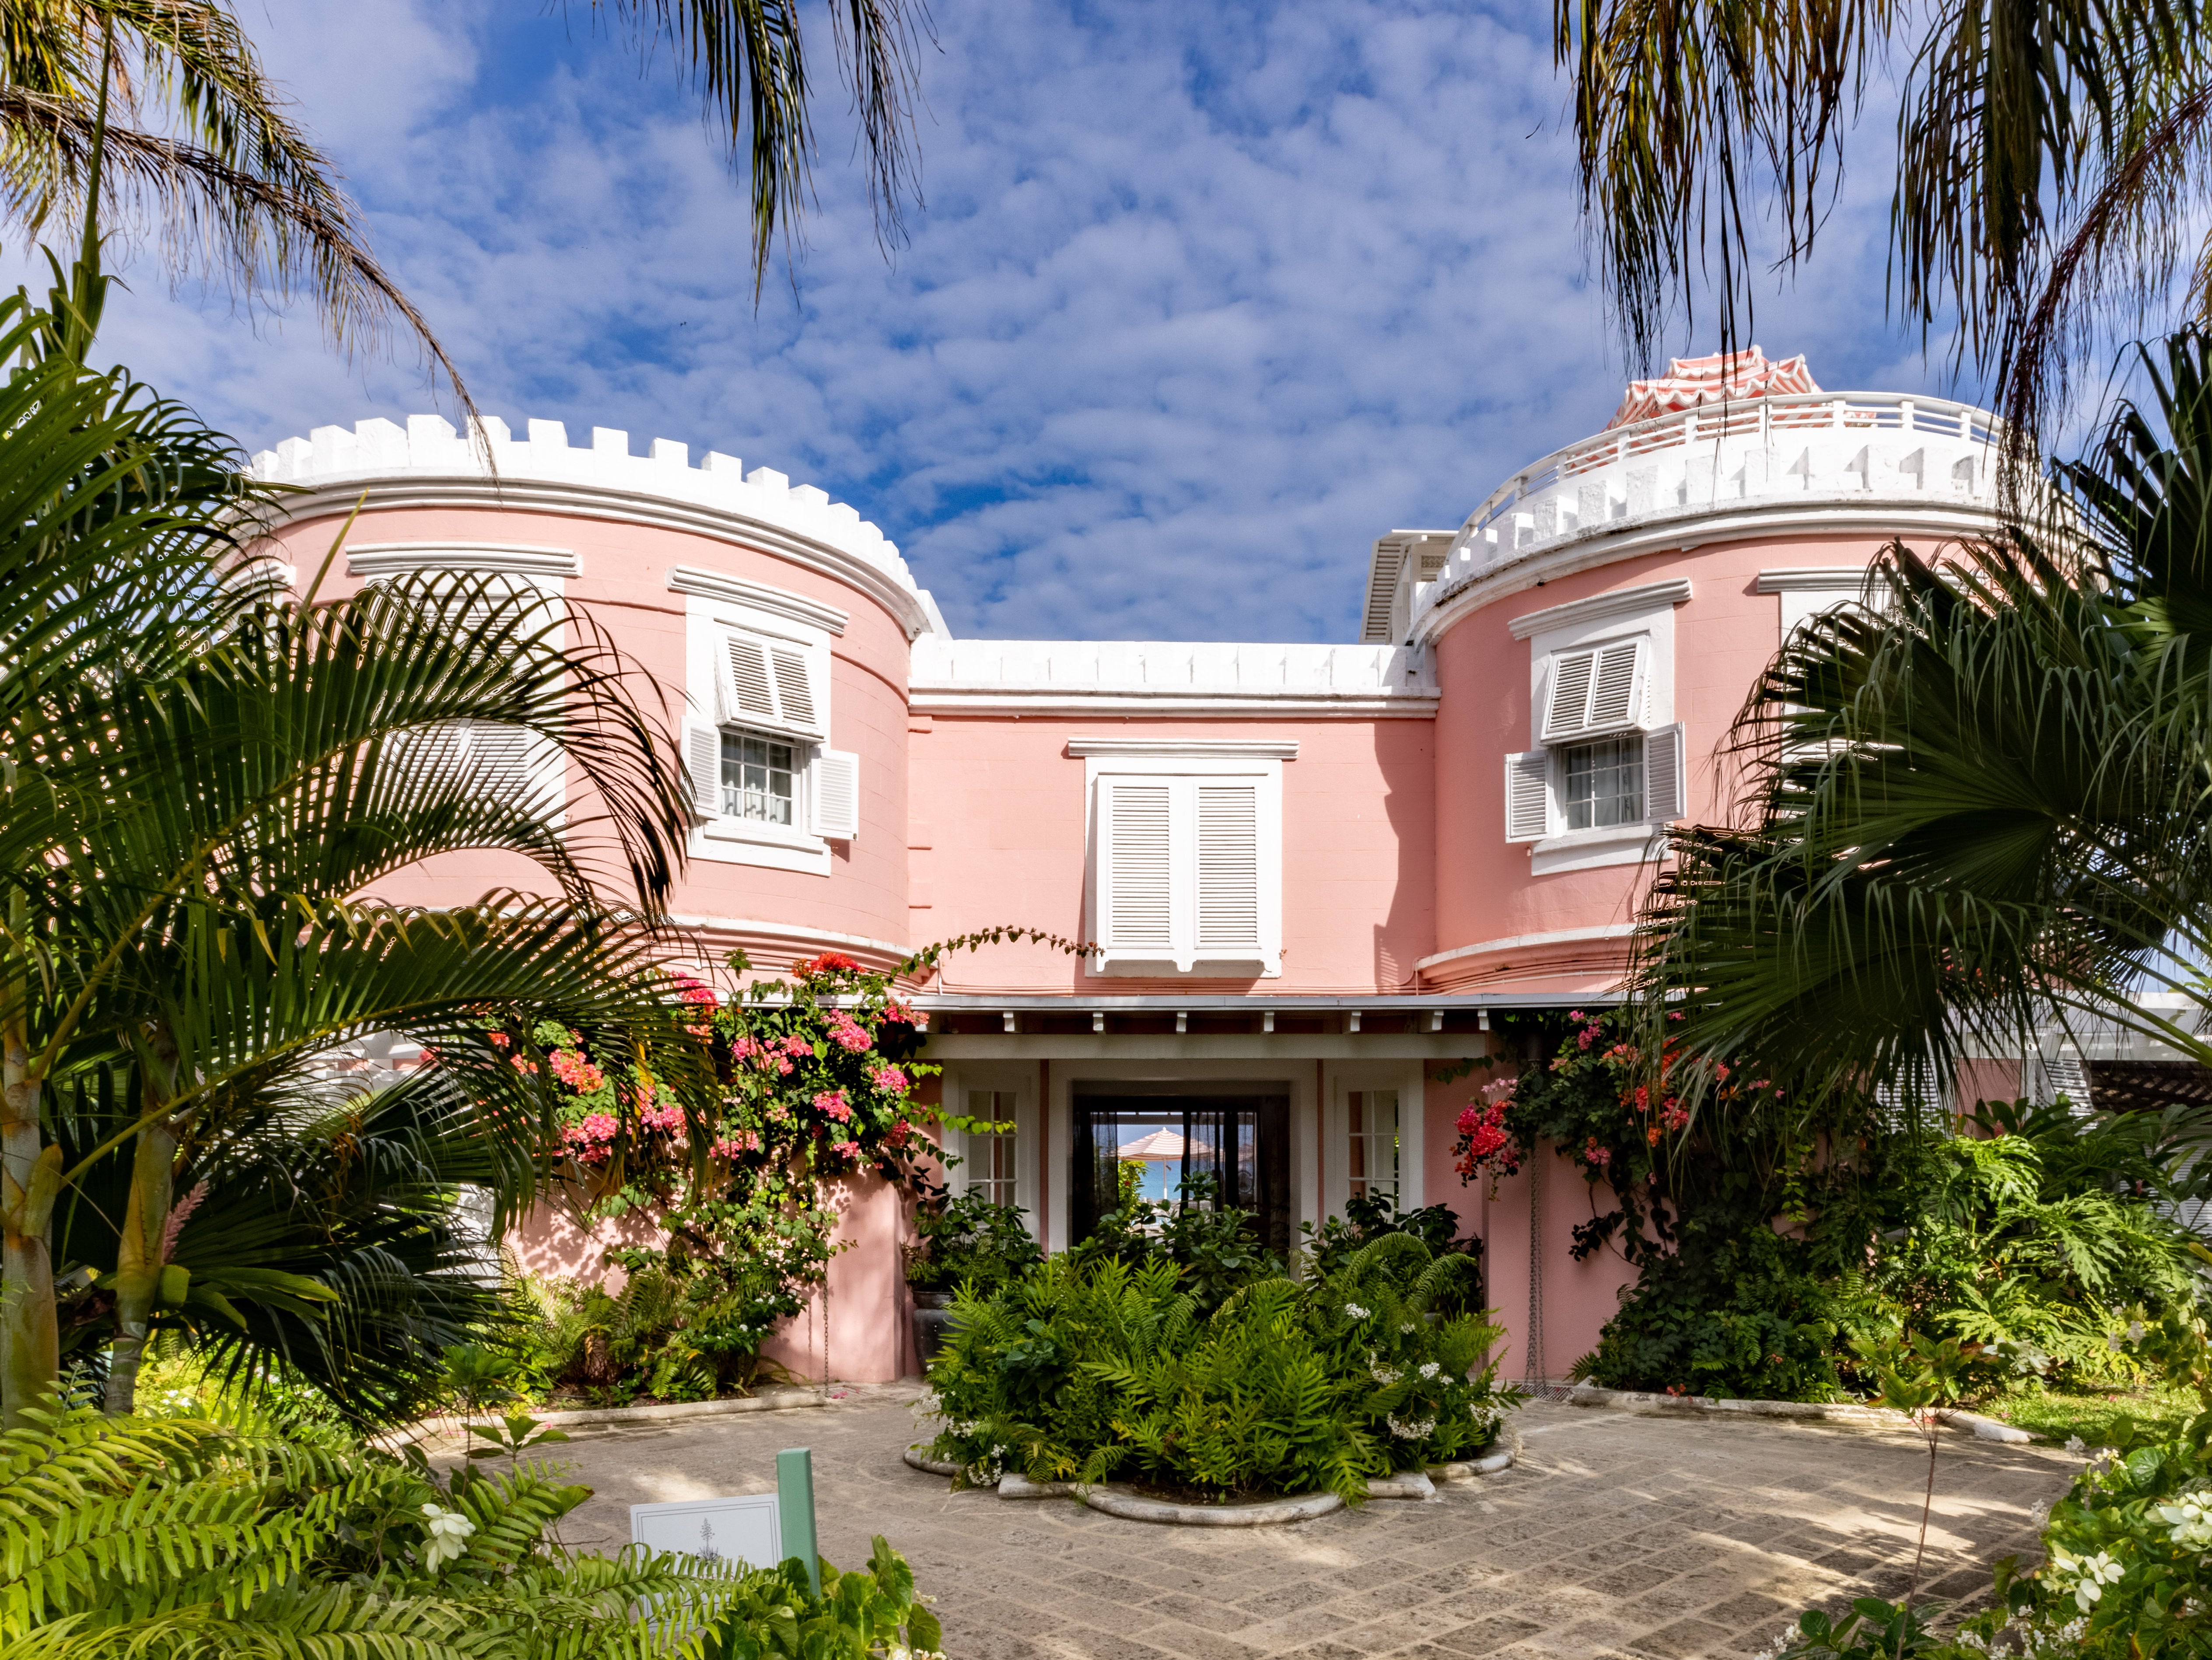 Think candy-striped parasols and rose-hued walls at Cobblers Cove, Barbados